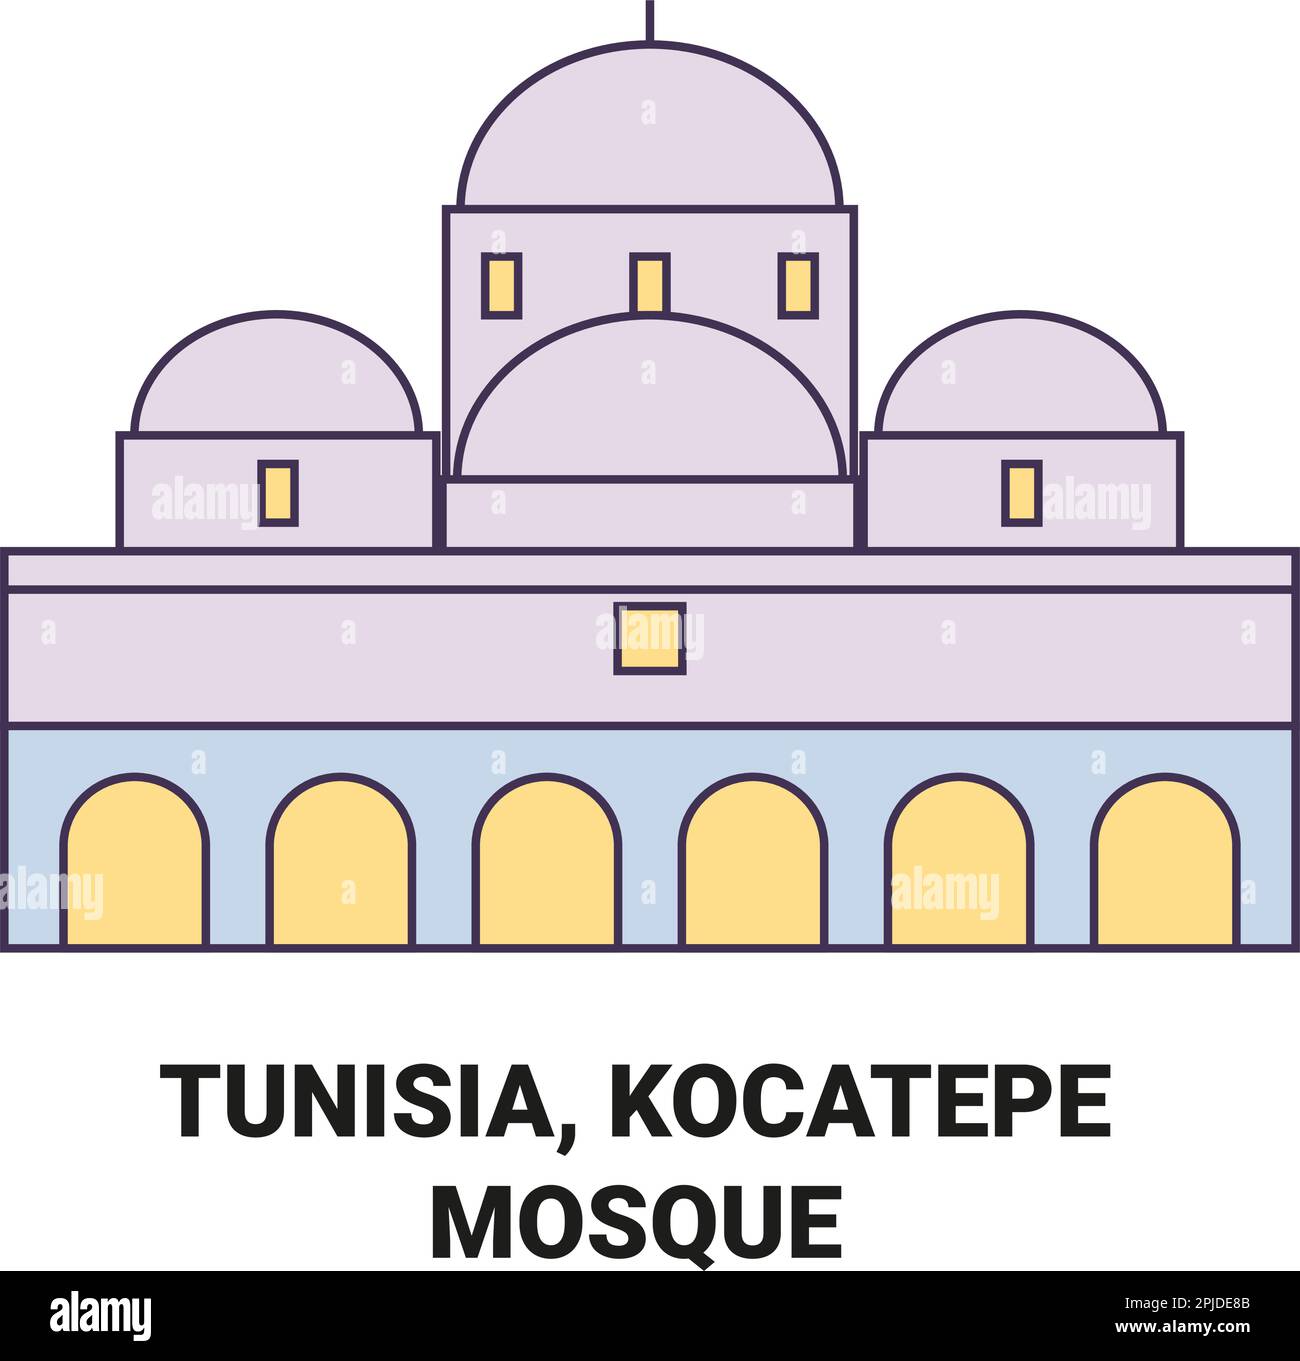 Tunisia, Kocatepe Mosque, travel landmark vector illustration Stock Vector